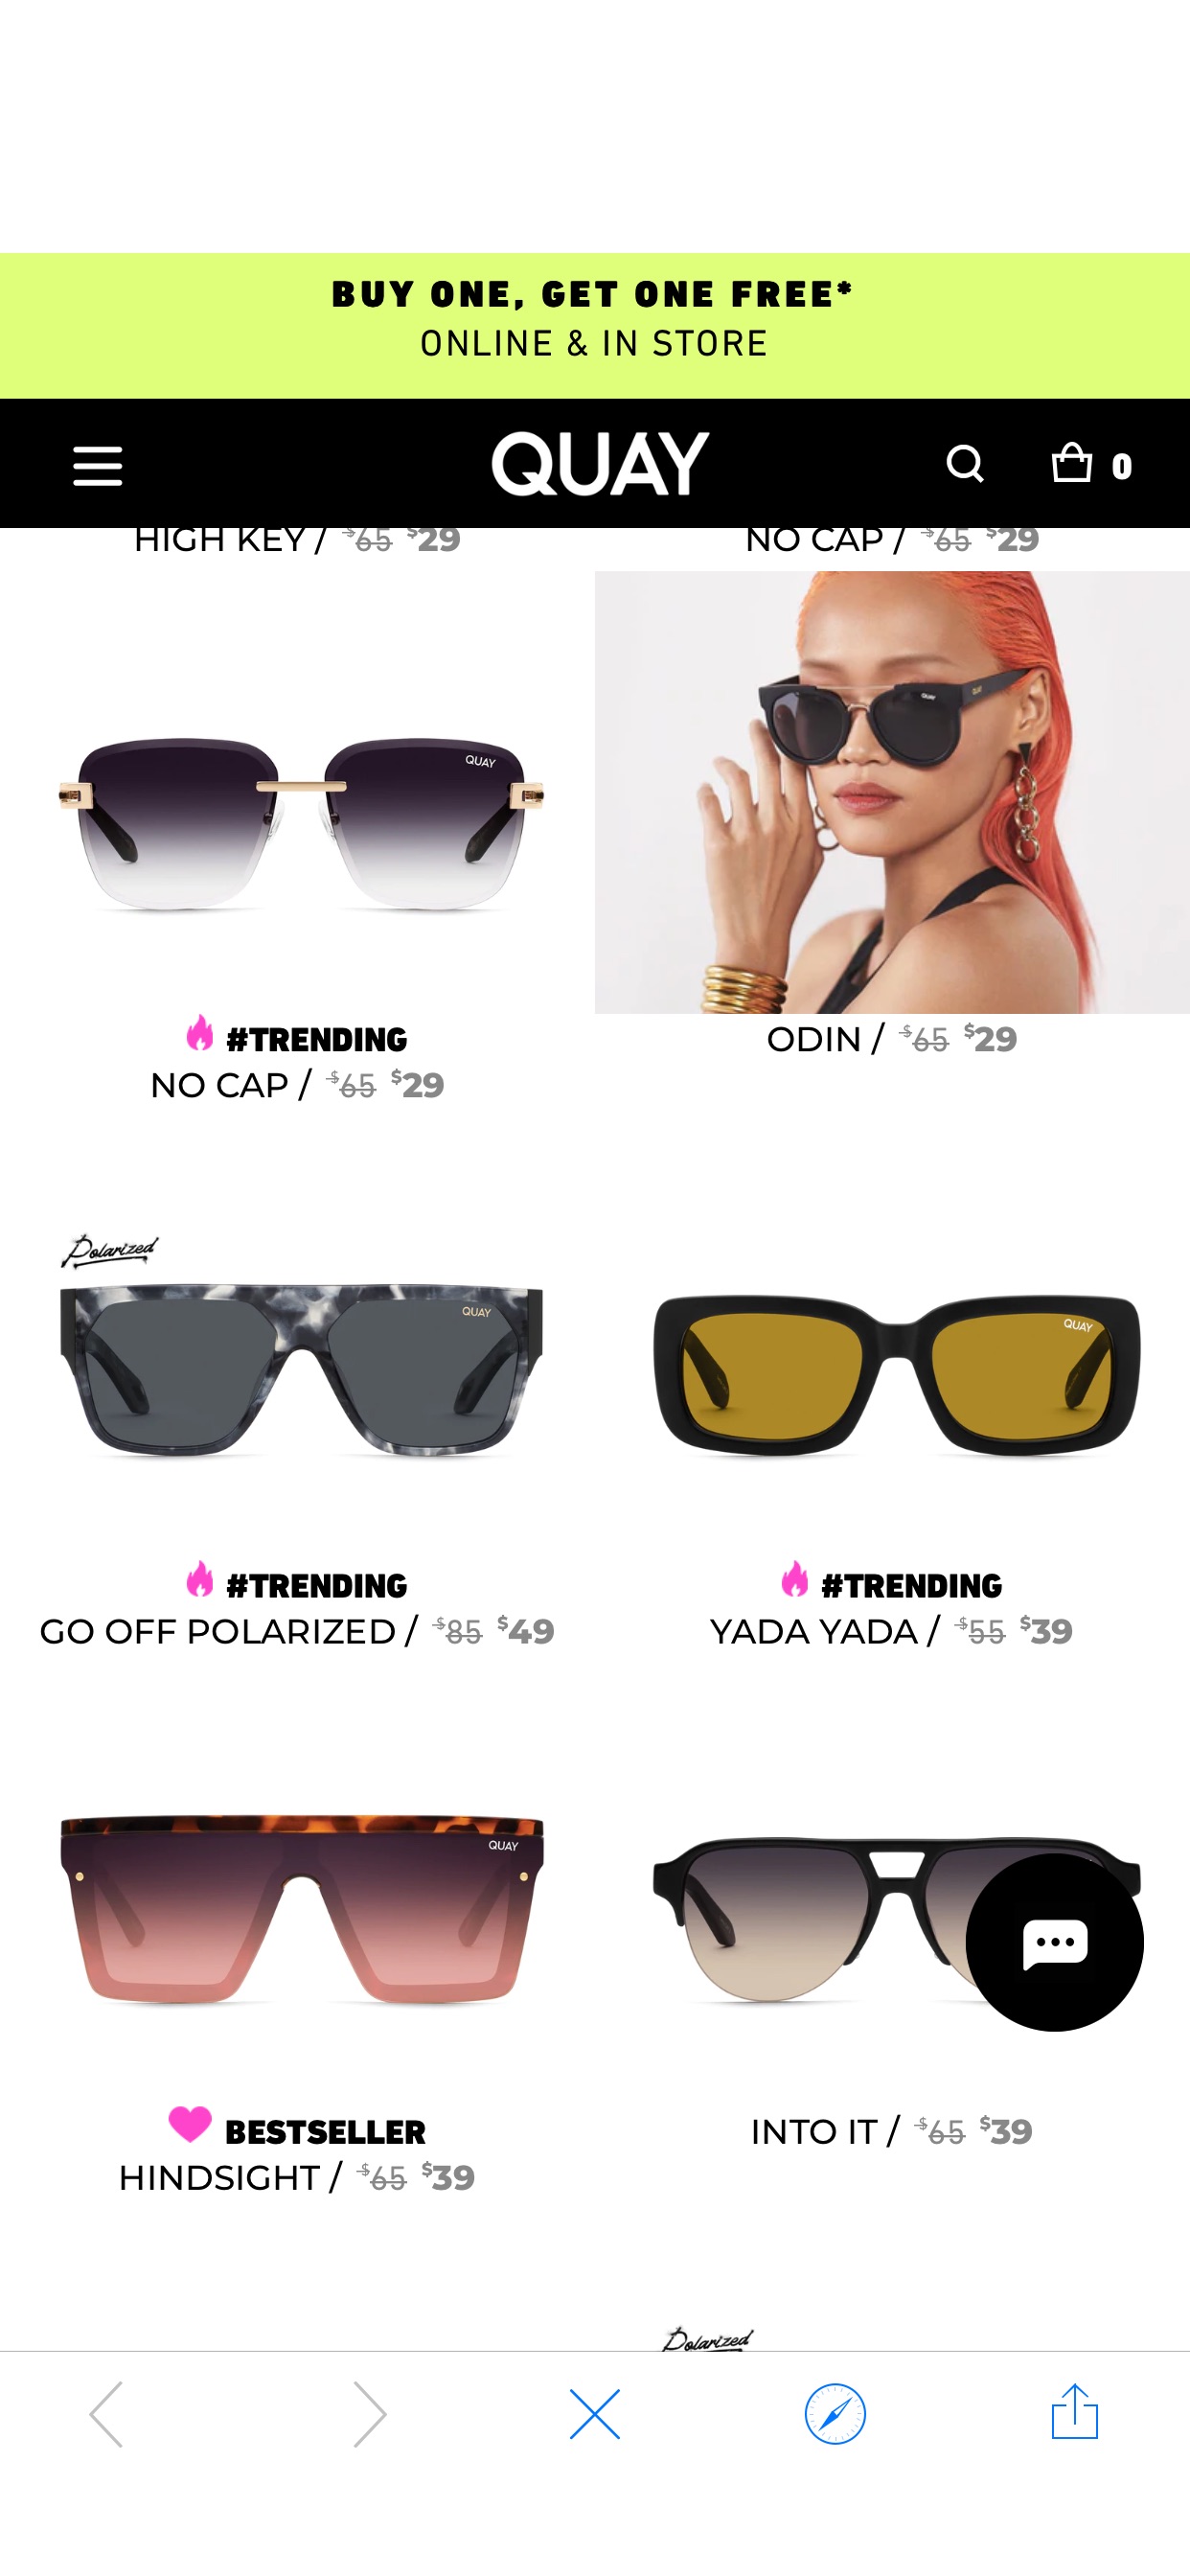 Stylish & Affordable Sunglasses on Sale | Quay Australia 精选太阳眼镜仅10刀